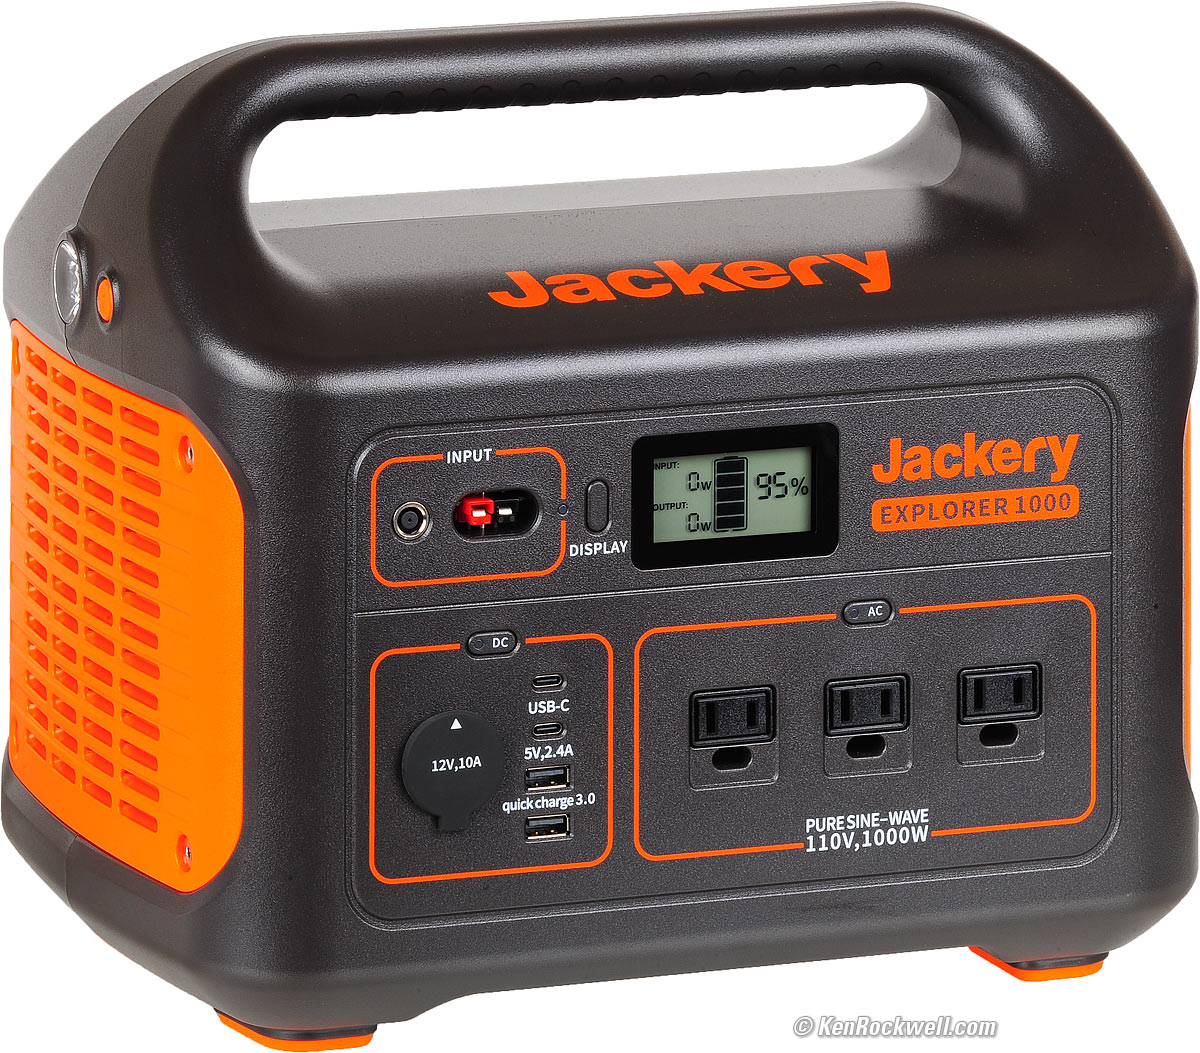 Jackery Explorer 1000 Portable Power Station, Buy Now